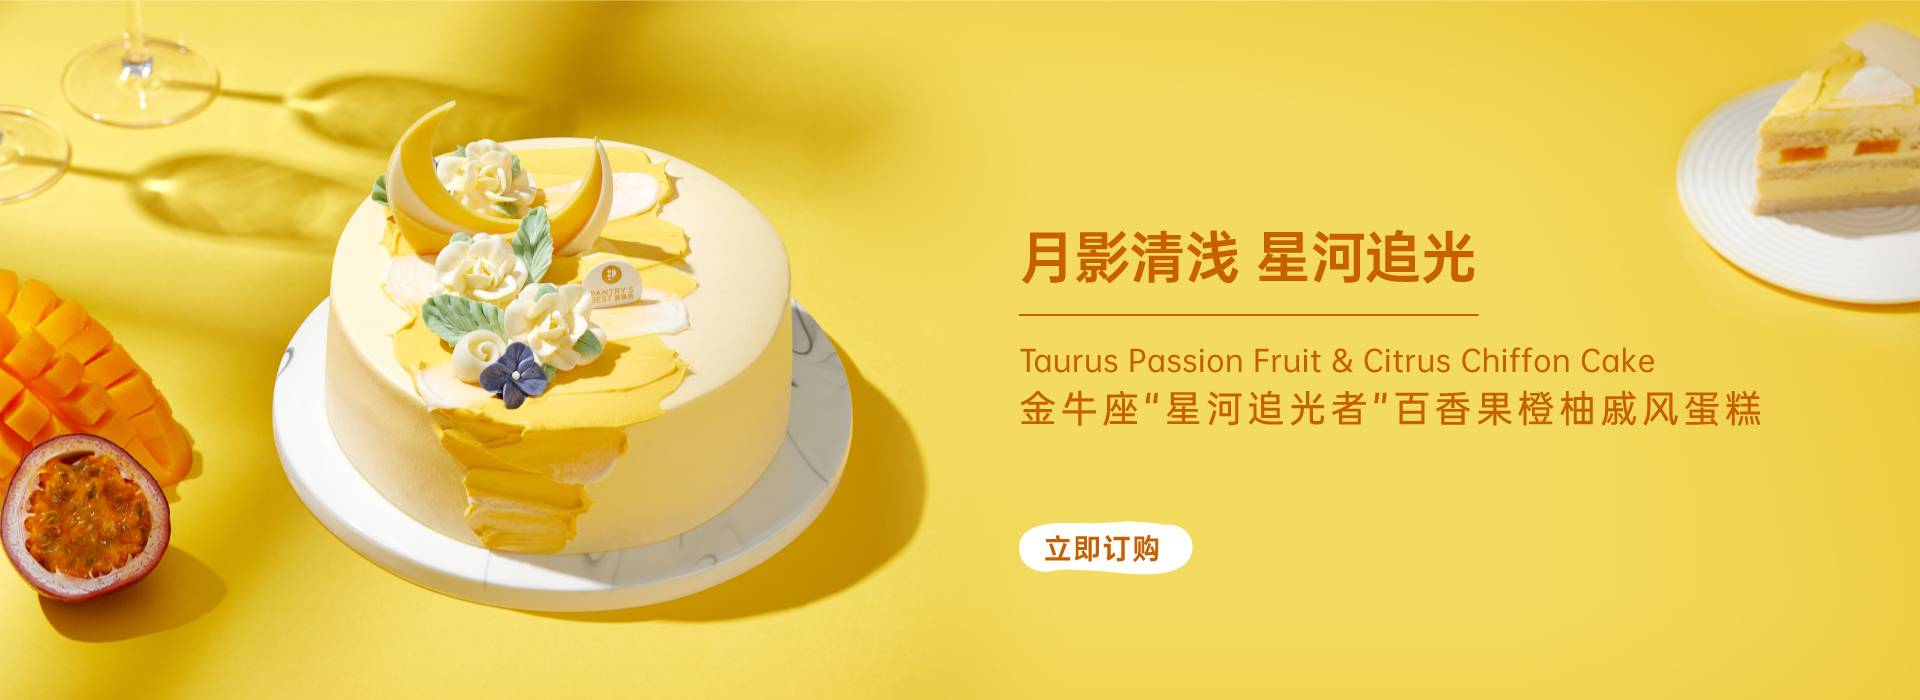 Taurus Passion Fruit & Citrus Chiffon Cake